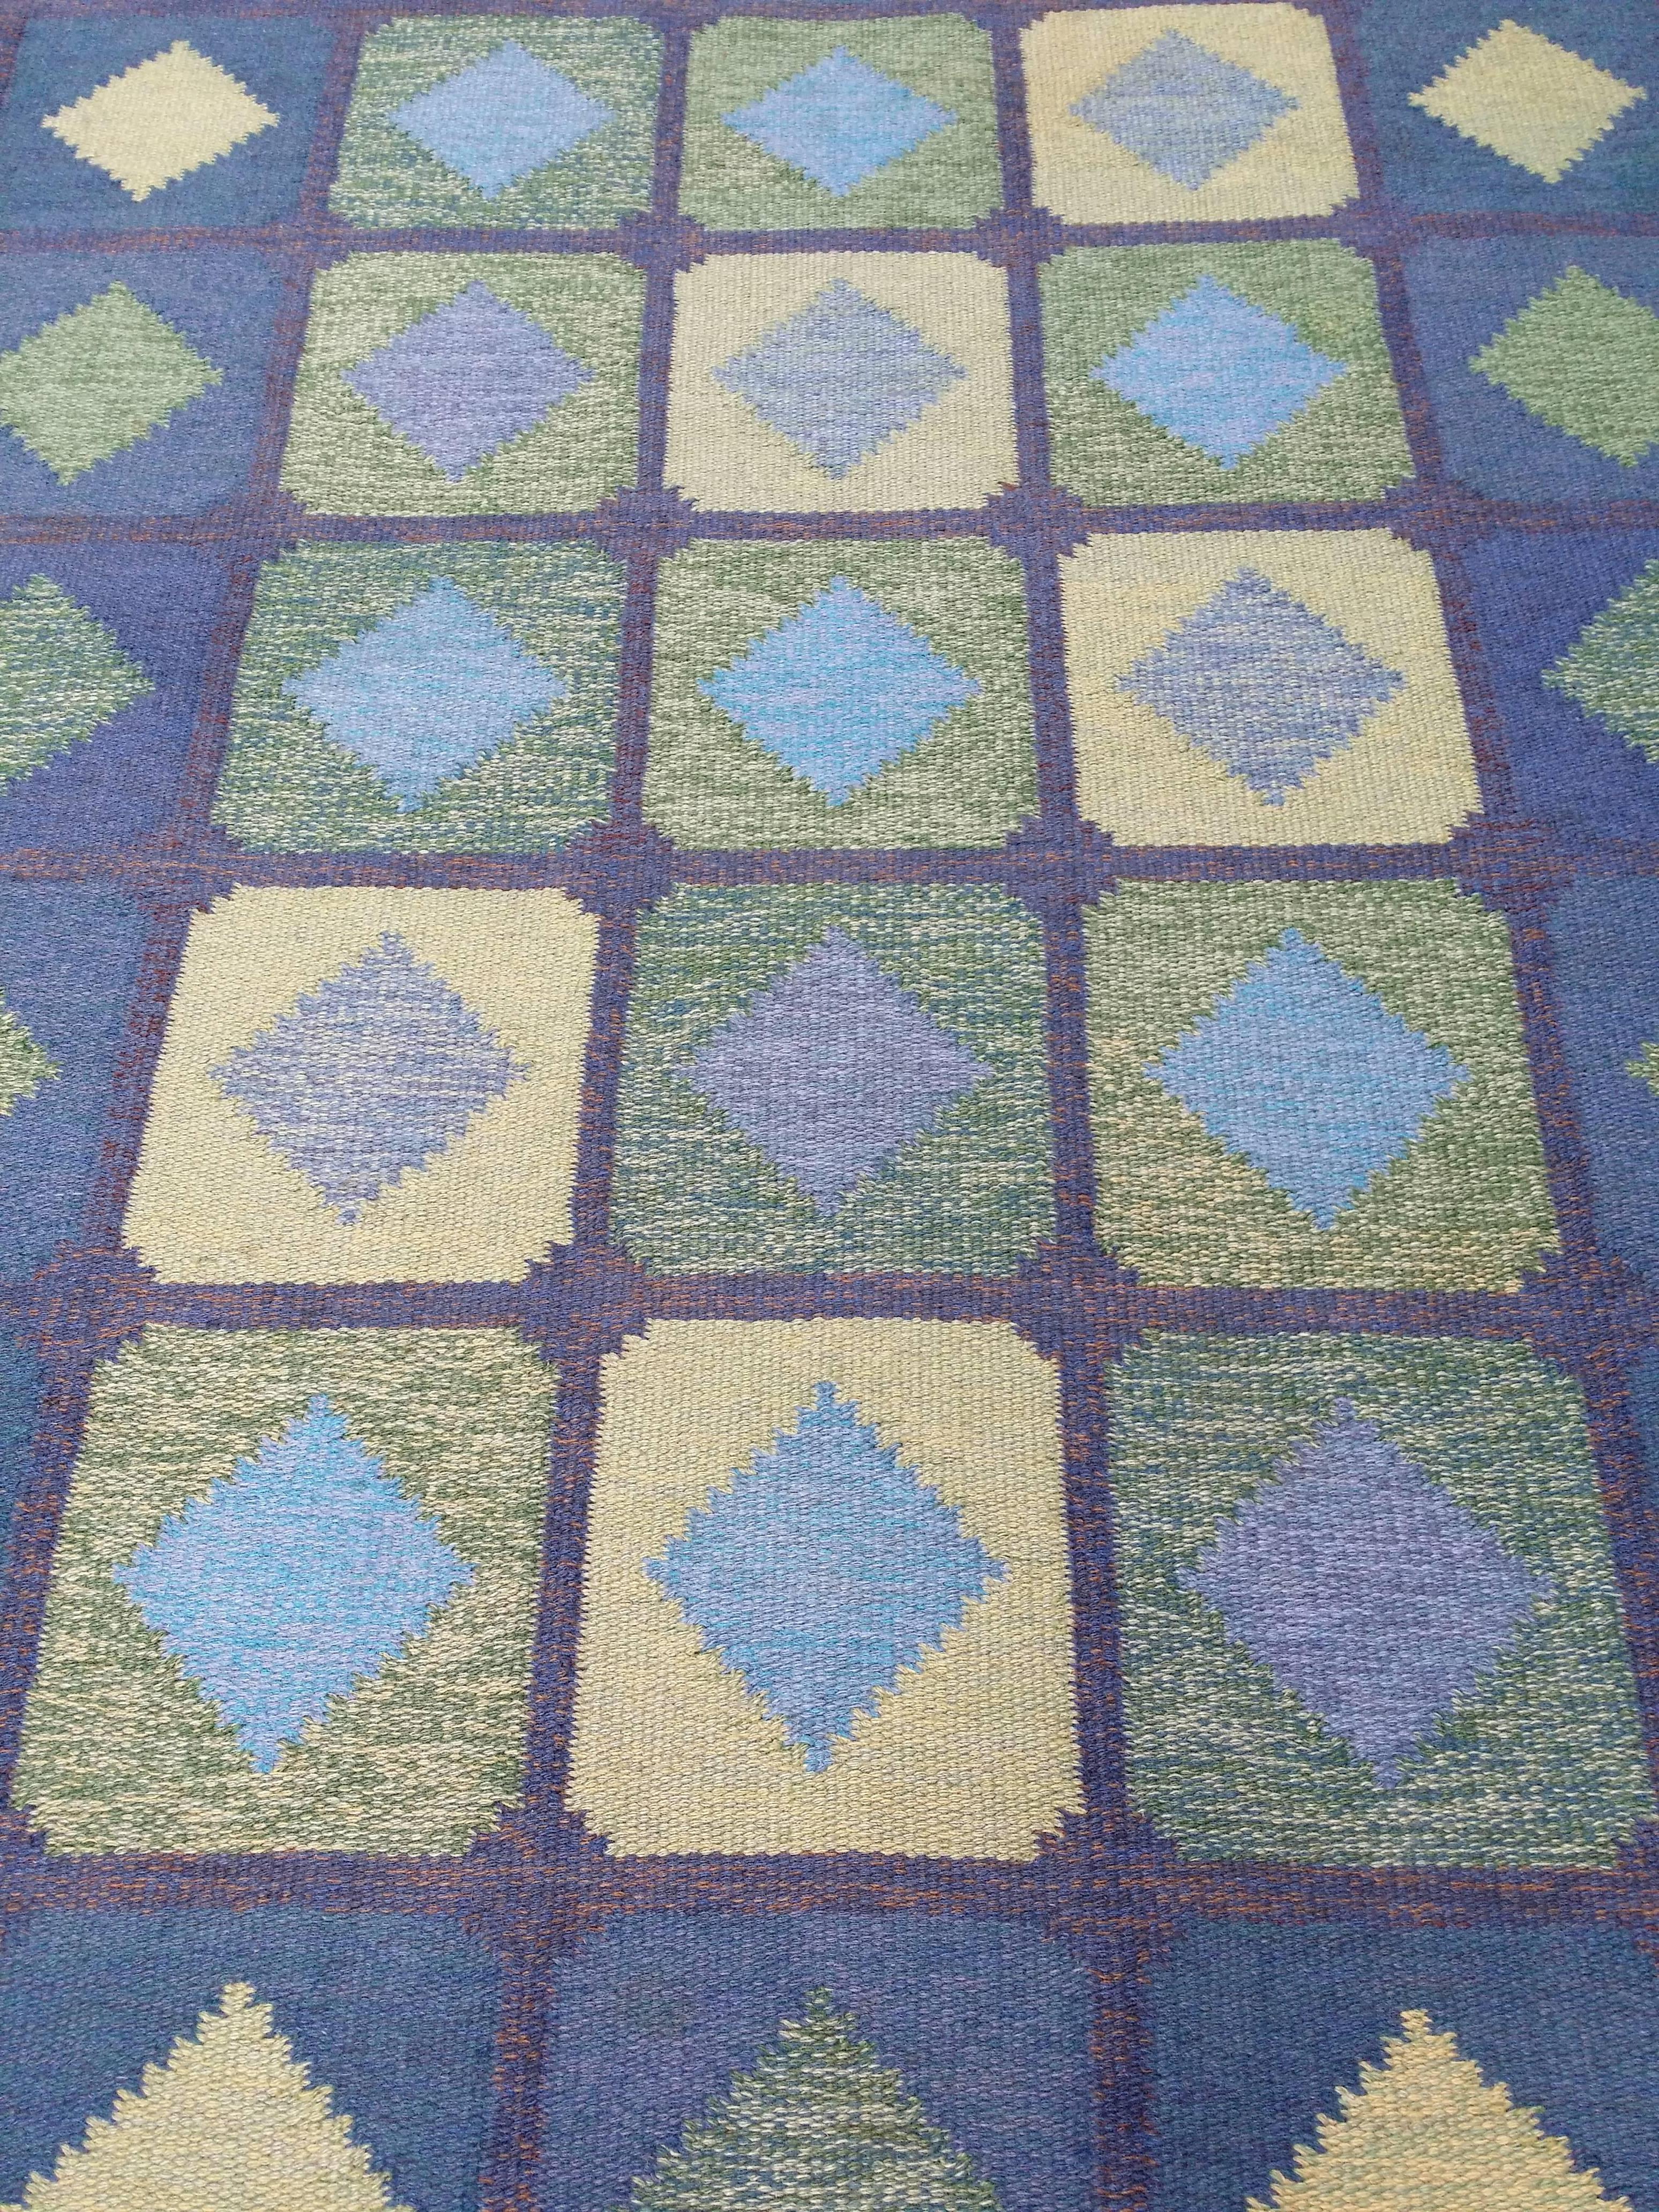 Squares with diamonds -summer. Swedish flatwoven rölakan rug. Composed by Birgitta Södergren. Warps: light beige linen, Z3S plied. Weft: wool,Z5 spun. Technique: dovetail tapestry ( warp slinging). Missing signature . Condition: good, both ends